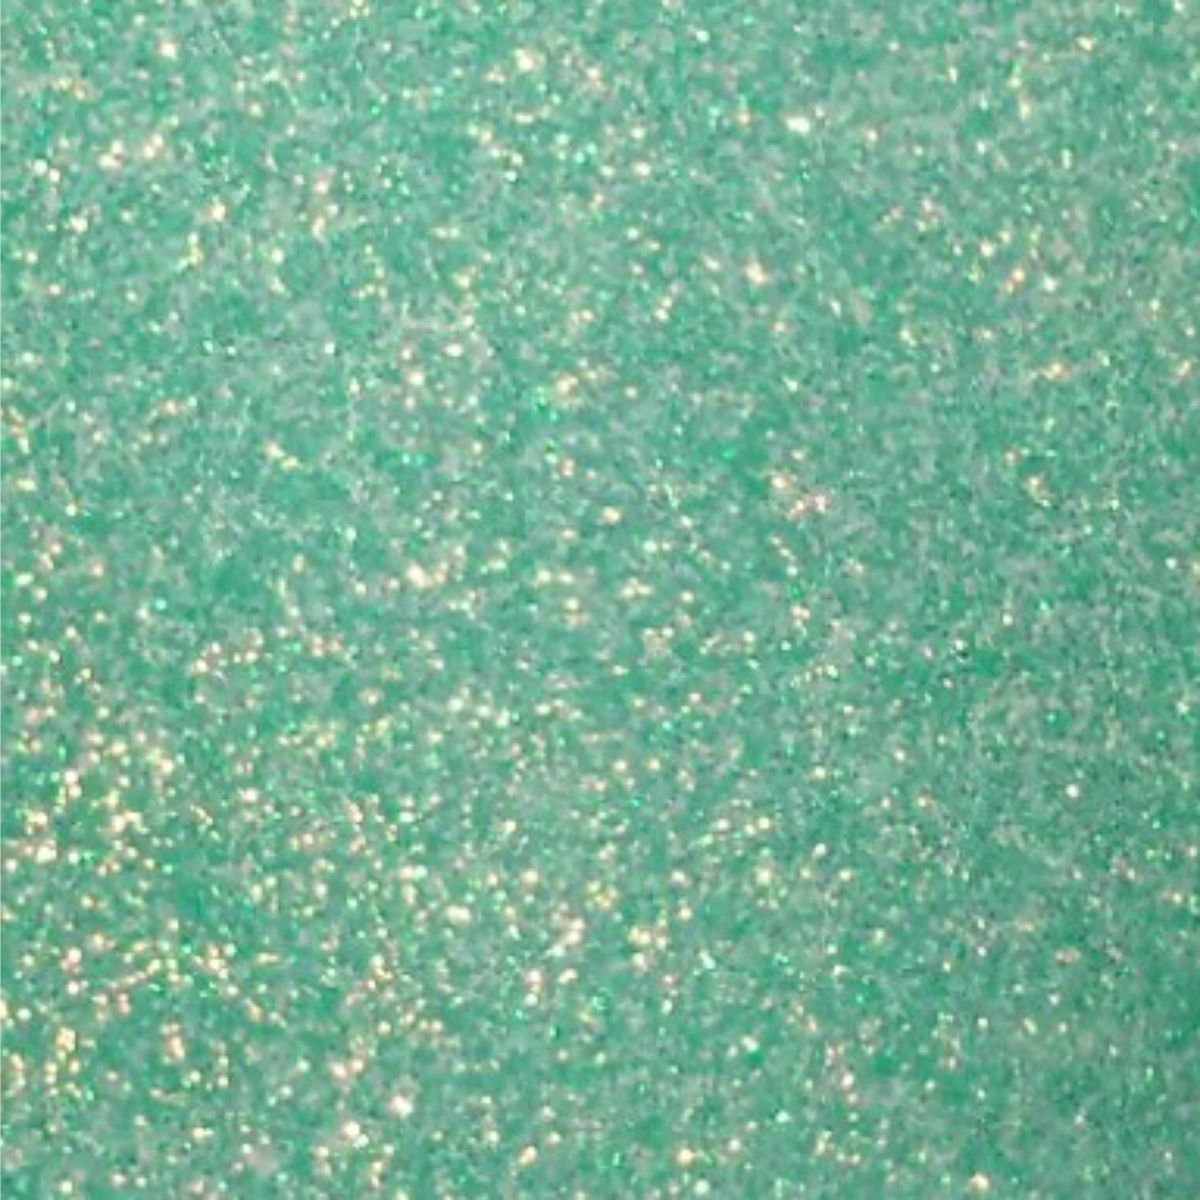 NEON Glitter PACK FLUORESCENT Ultra Fine Loose Glitter -  in